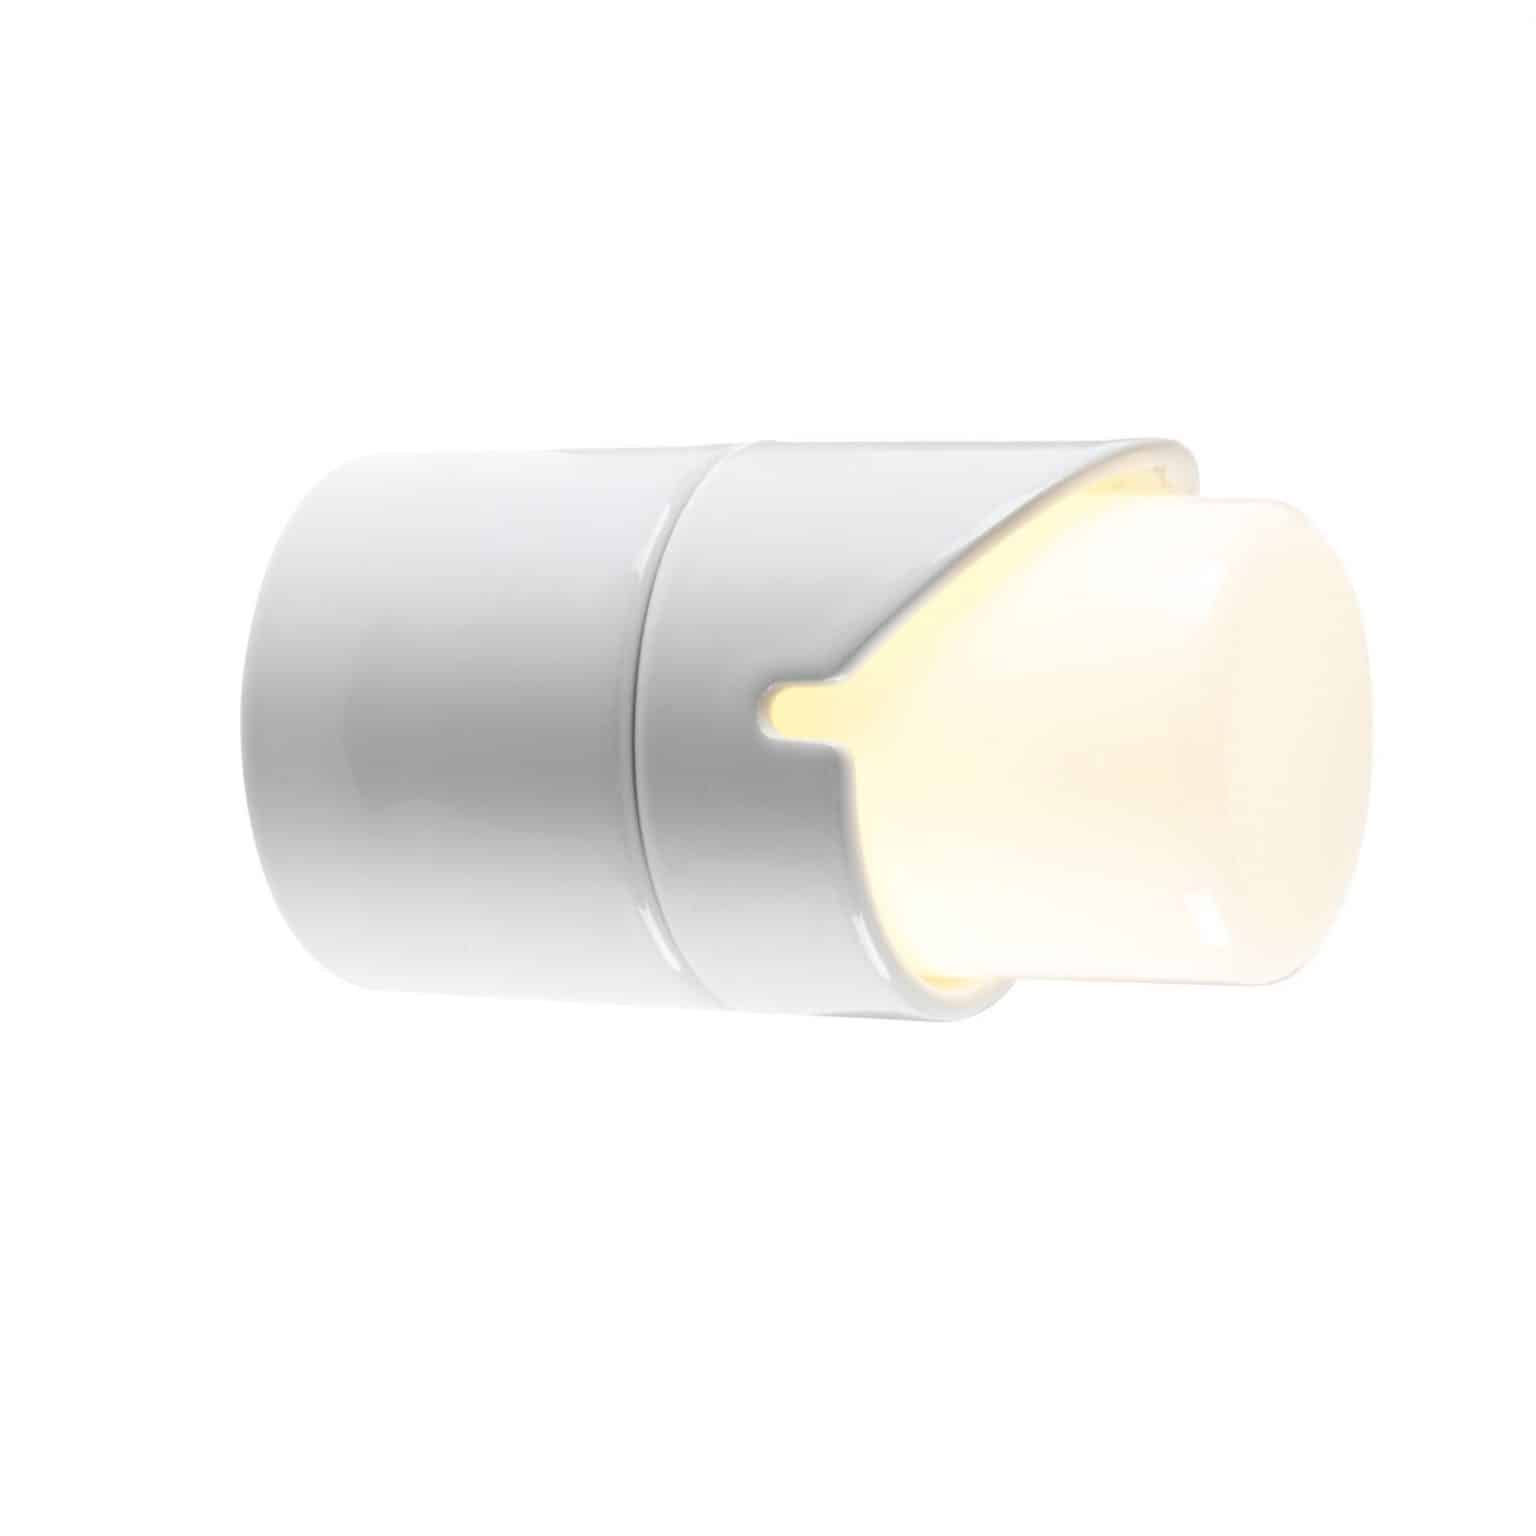 Porseleinen buitenlamp Light on wit Ifo electric tuinextra